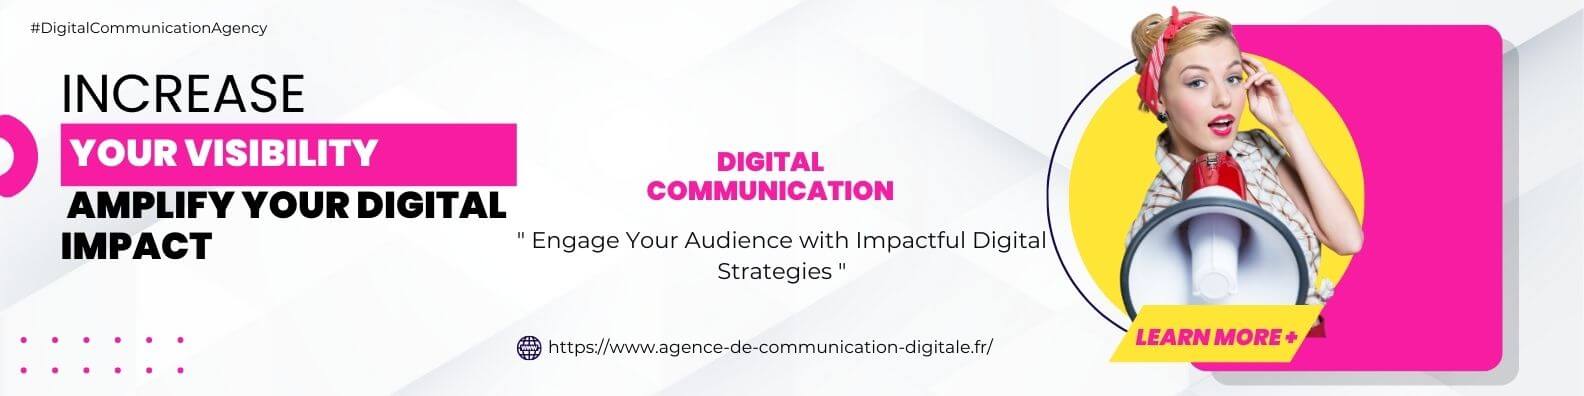 banner agence-de-communication-digitale.fr (4) (1)